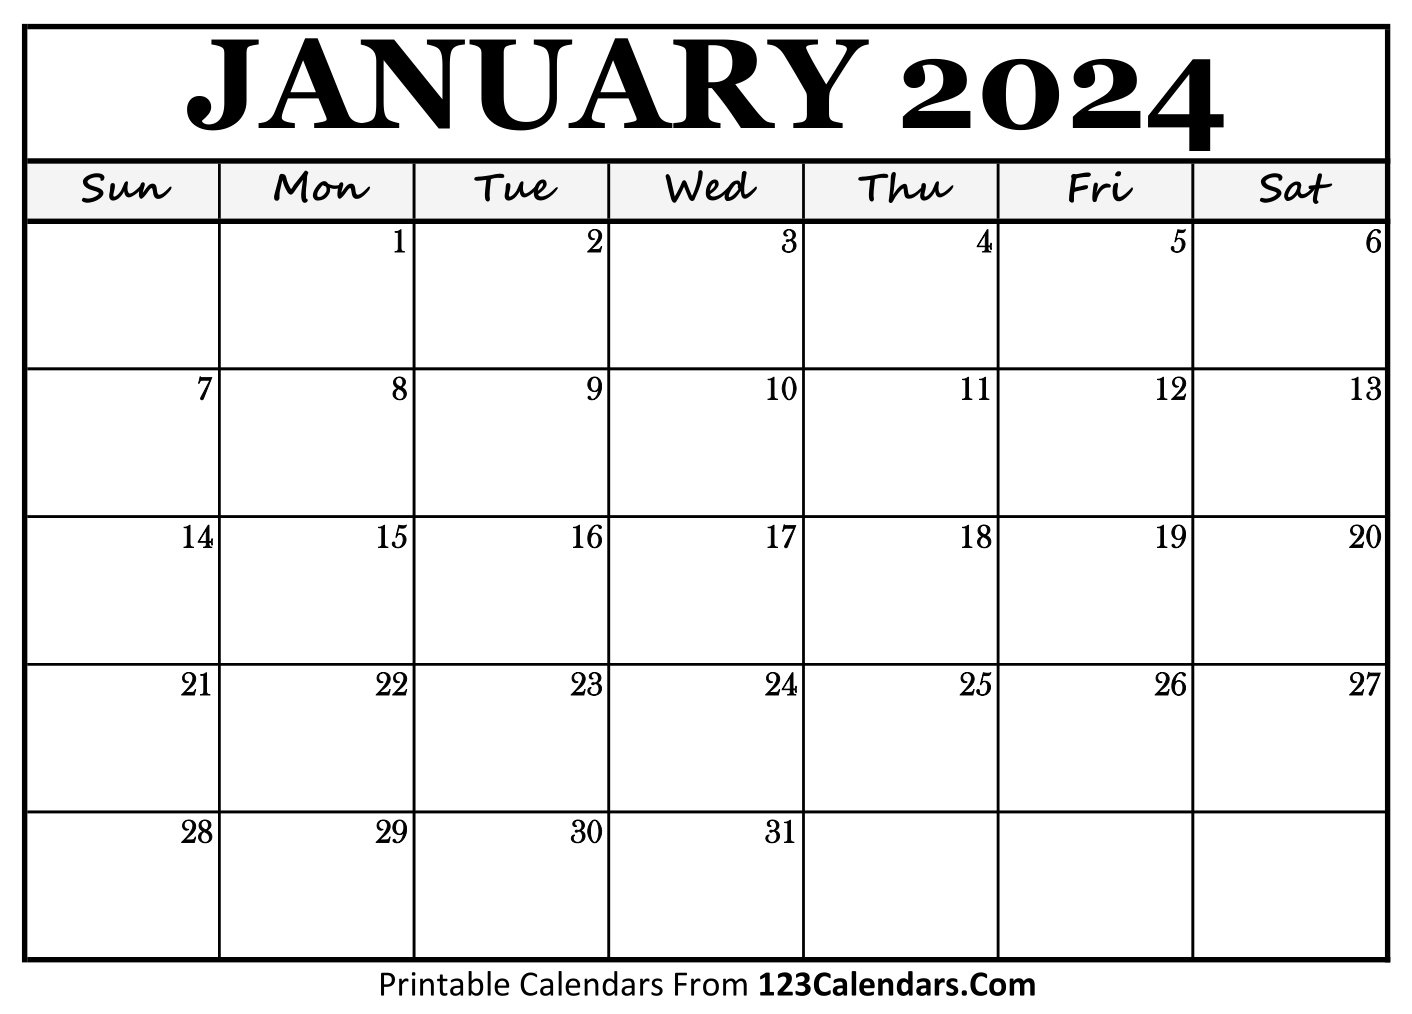 Printable January 2024 Calendar Templates - 123Calendars | Printable Calendar 2024 January Free